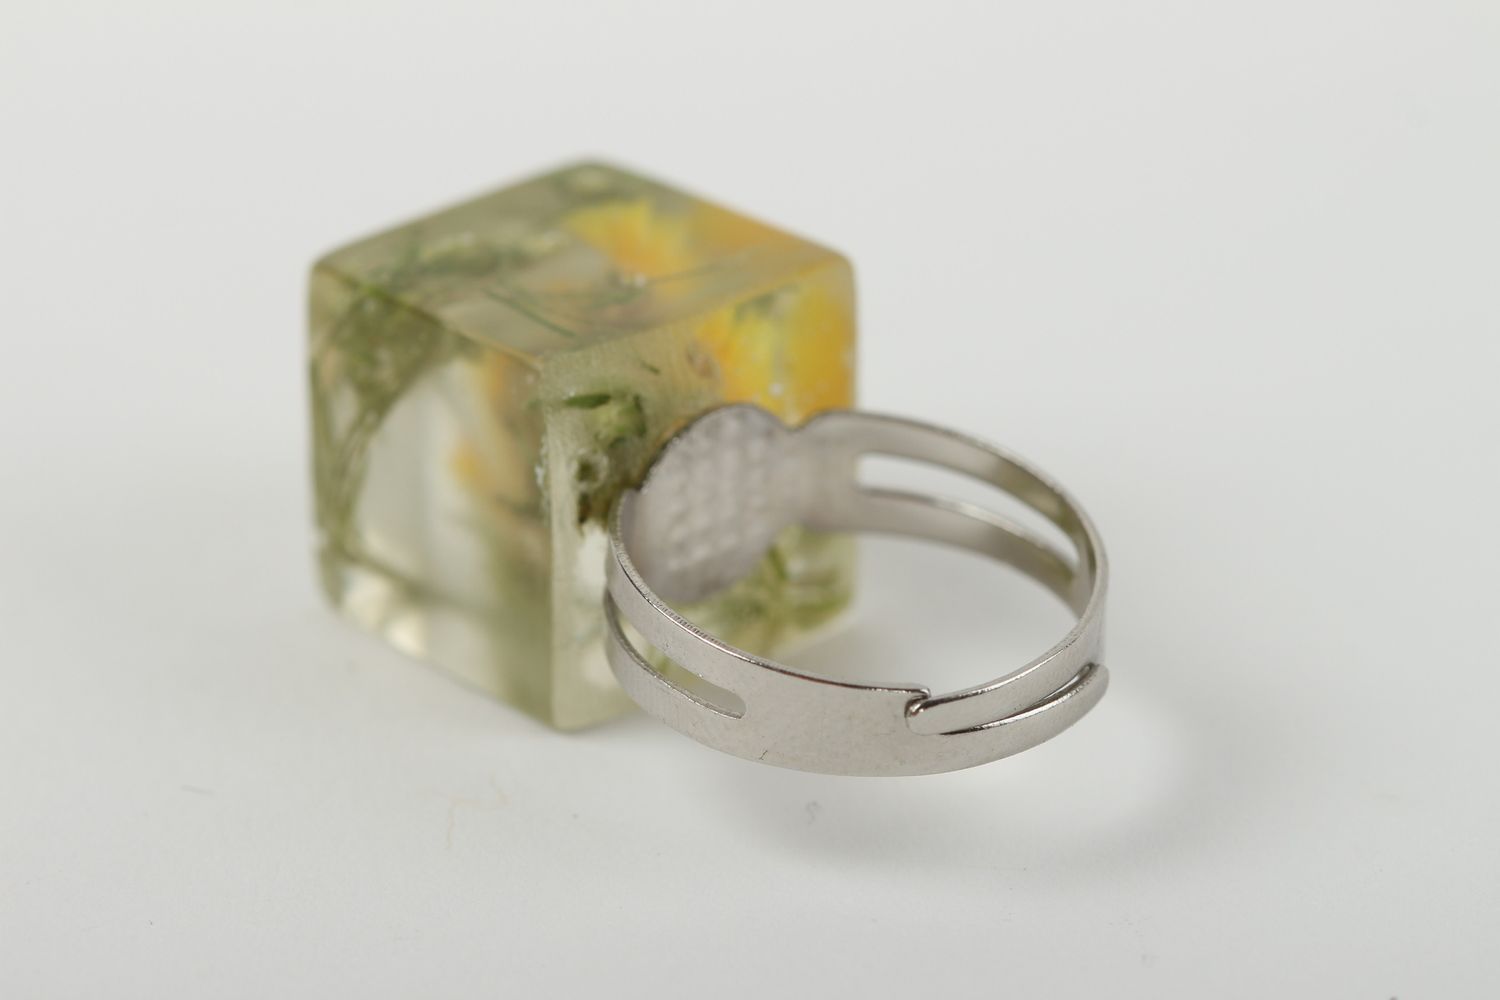 Handmade ring epoxy ring unusual jewelry designer accessory gift ideas photo 4